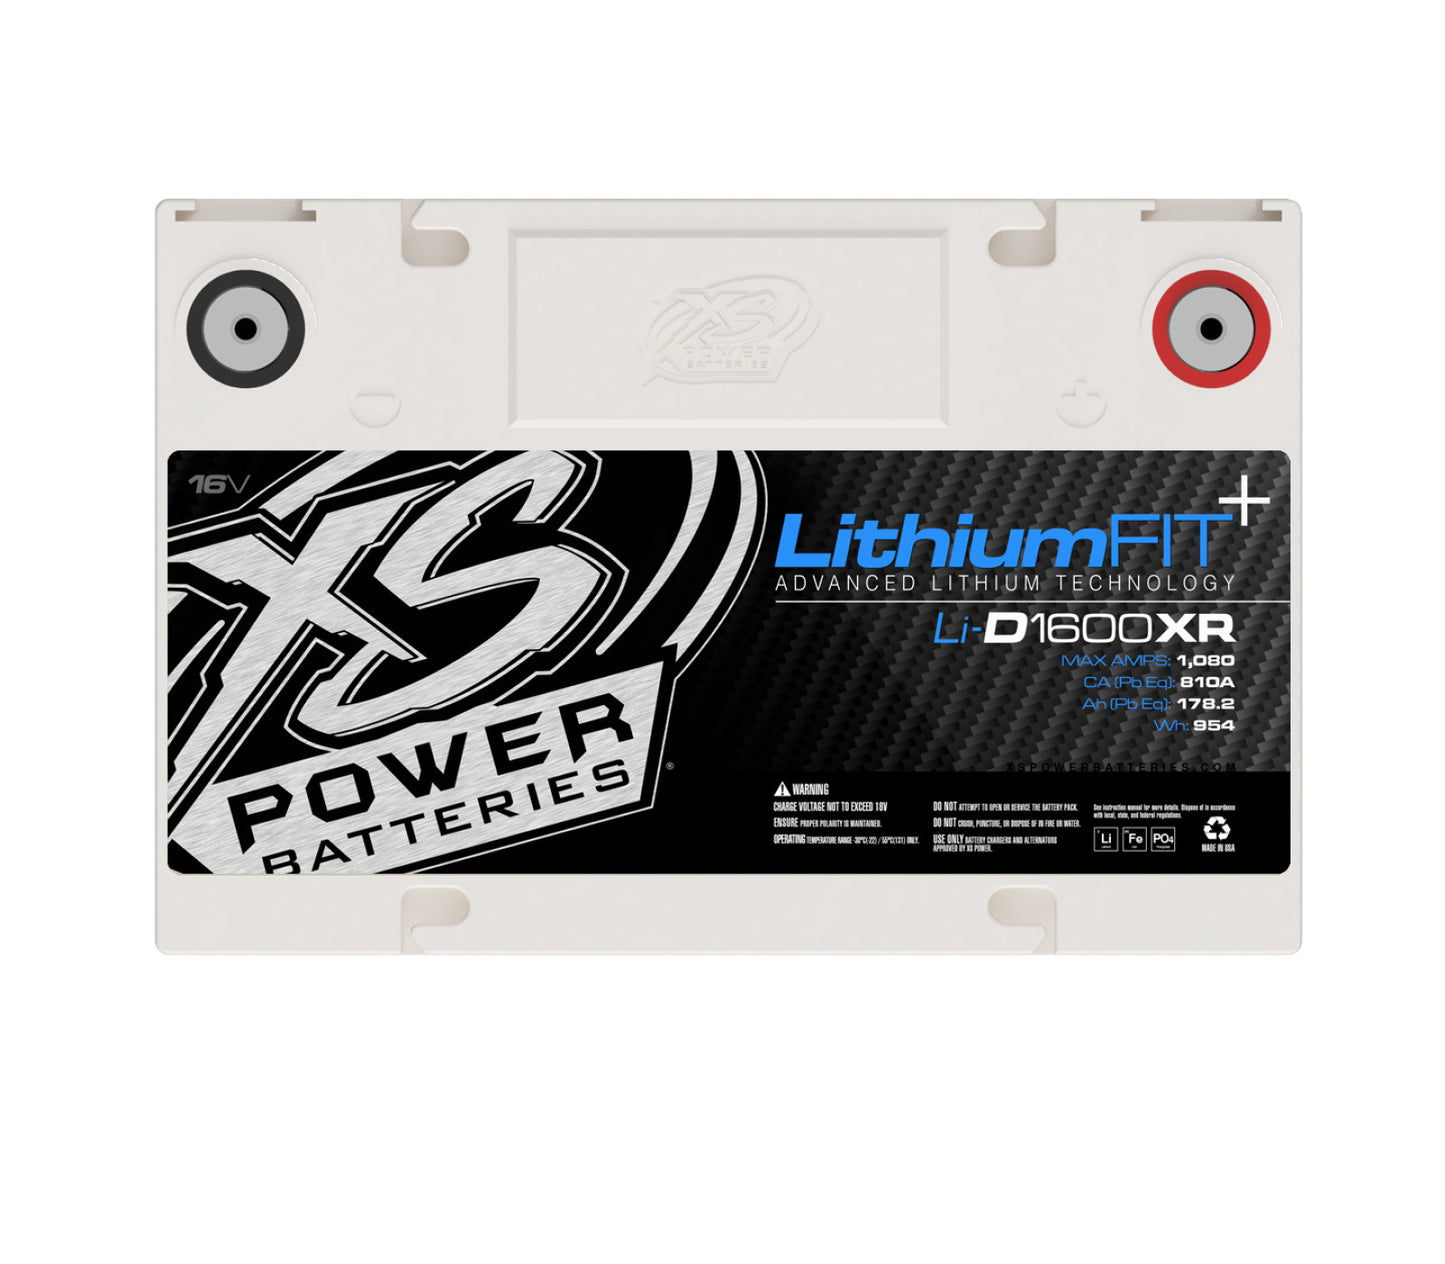 XS Power Batteries Lithium Racing 16V Batteries - Stud Adaptors/Terminal Bolts Included 1080 Max Amps Li-D1600XR